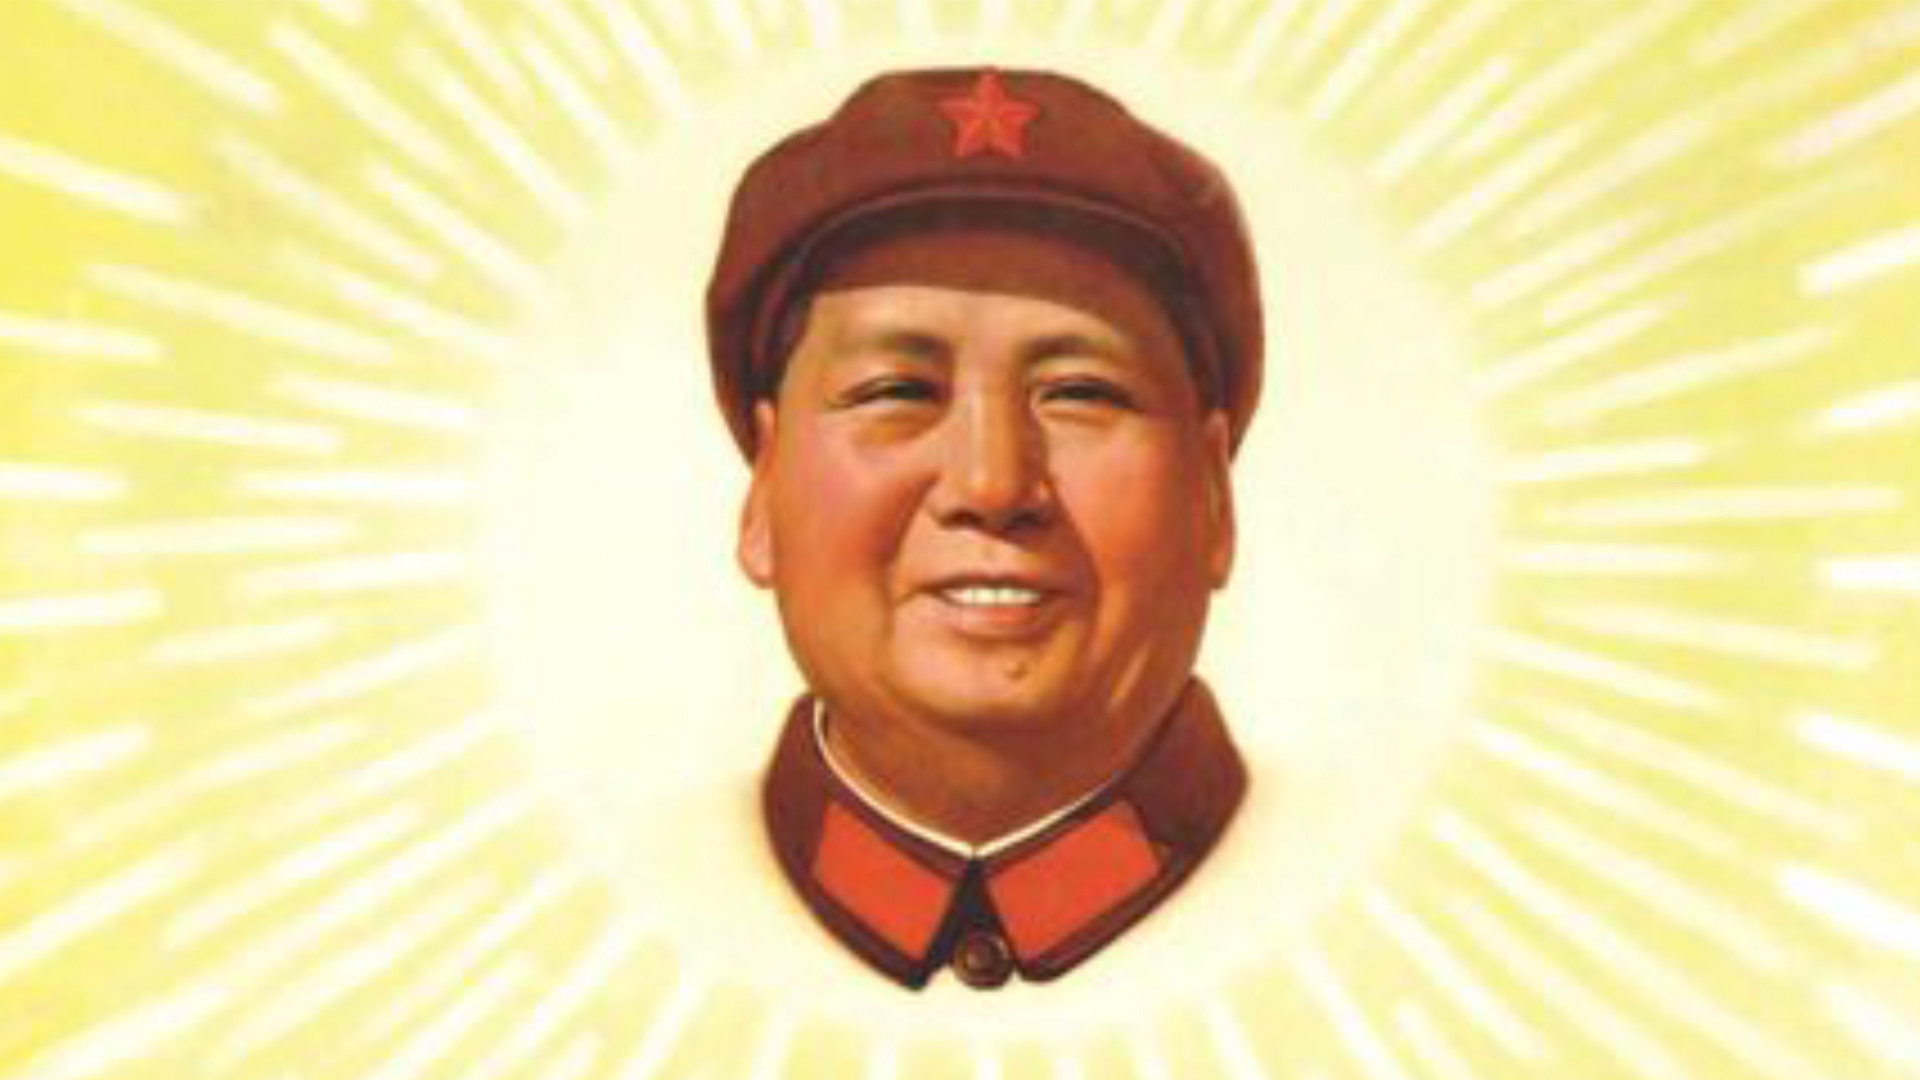 Mao Zedong image in golden halo